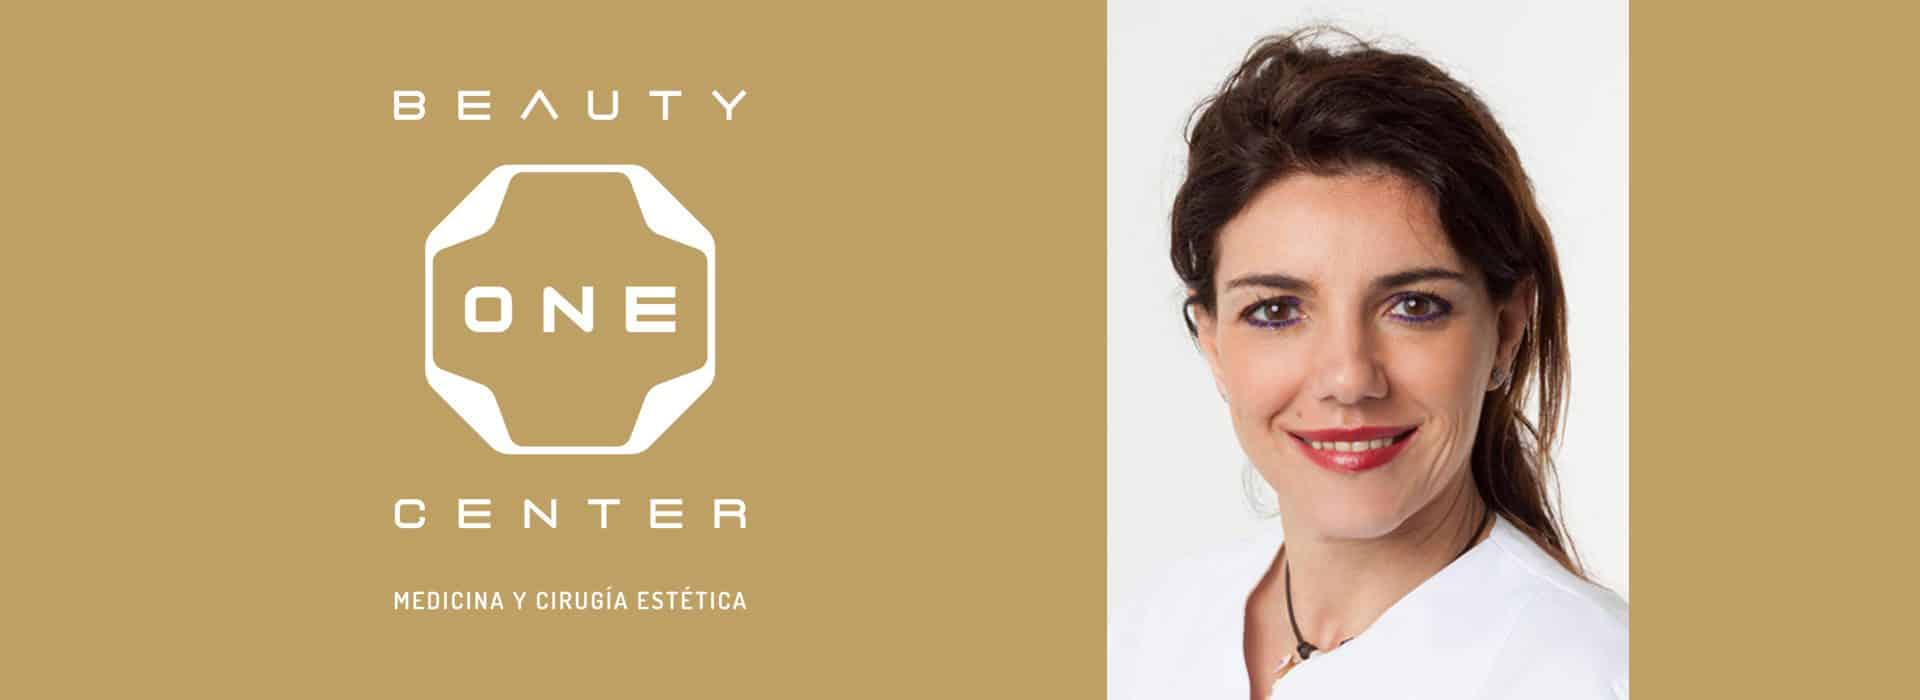 Beauty ONE Center da la bienvenida a la Dra. Oliveira